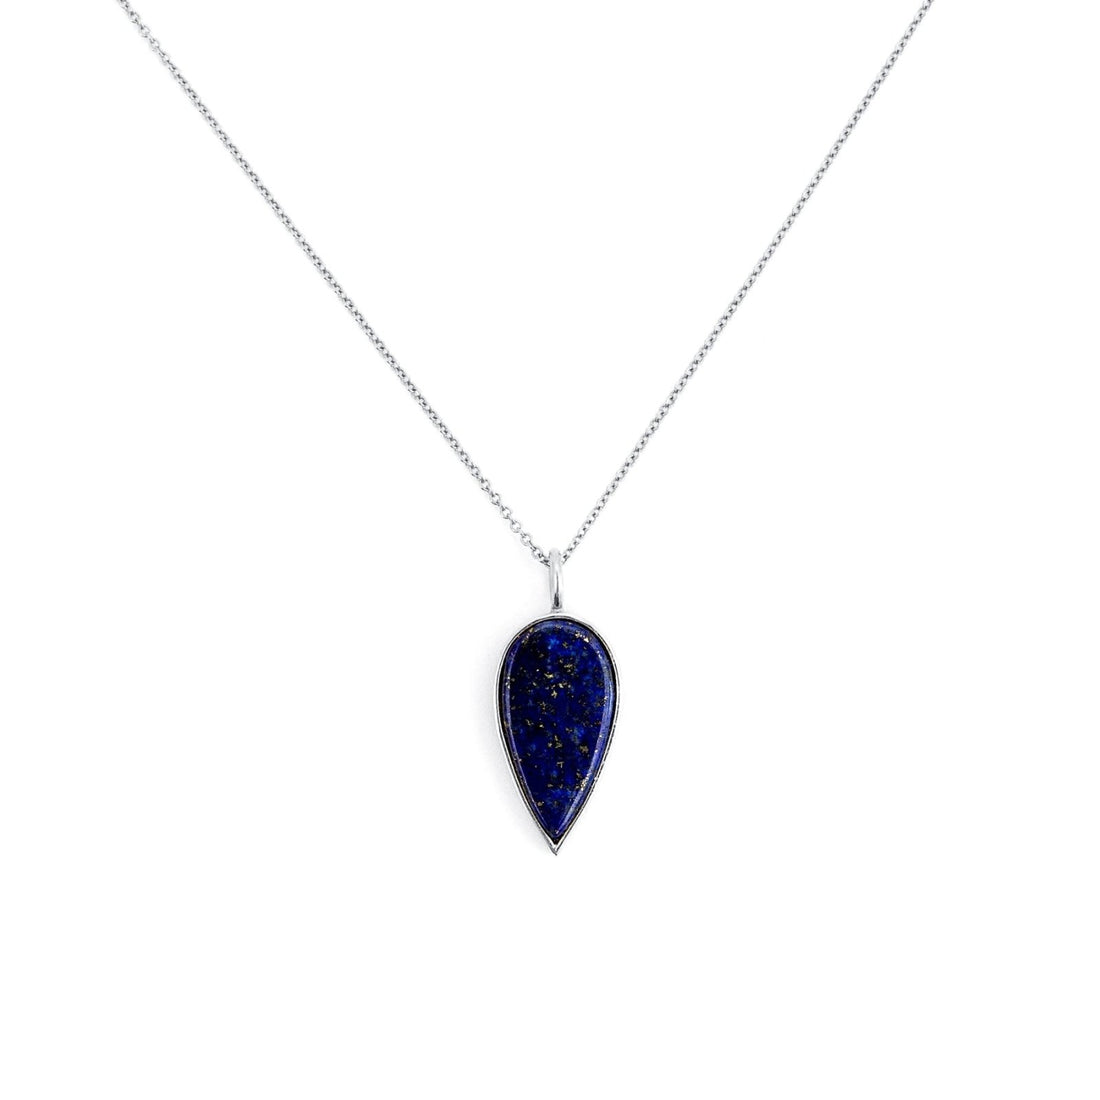 One of a Kind Lapis Necklace - Ele Keats Jewelry